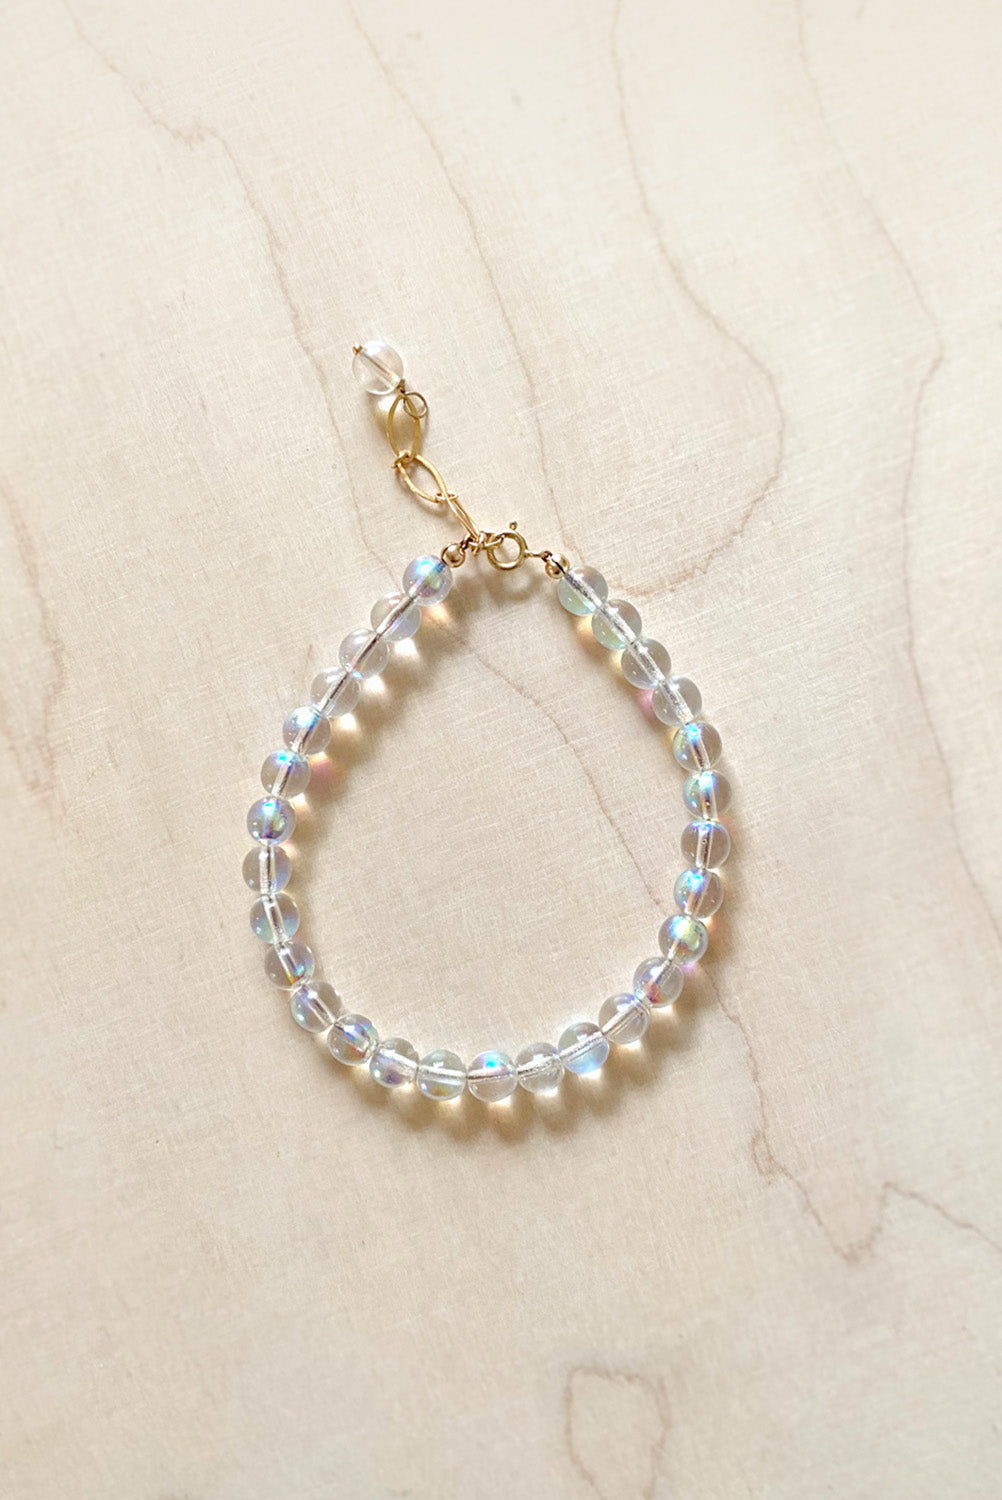 SOAP Bubbles - bracelet made of glass beads